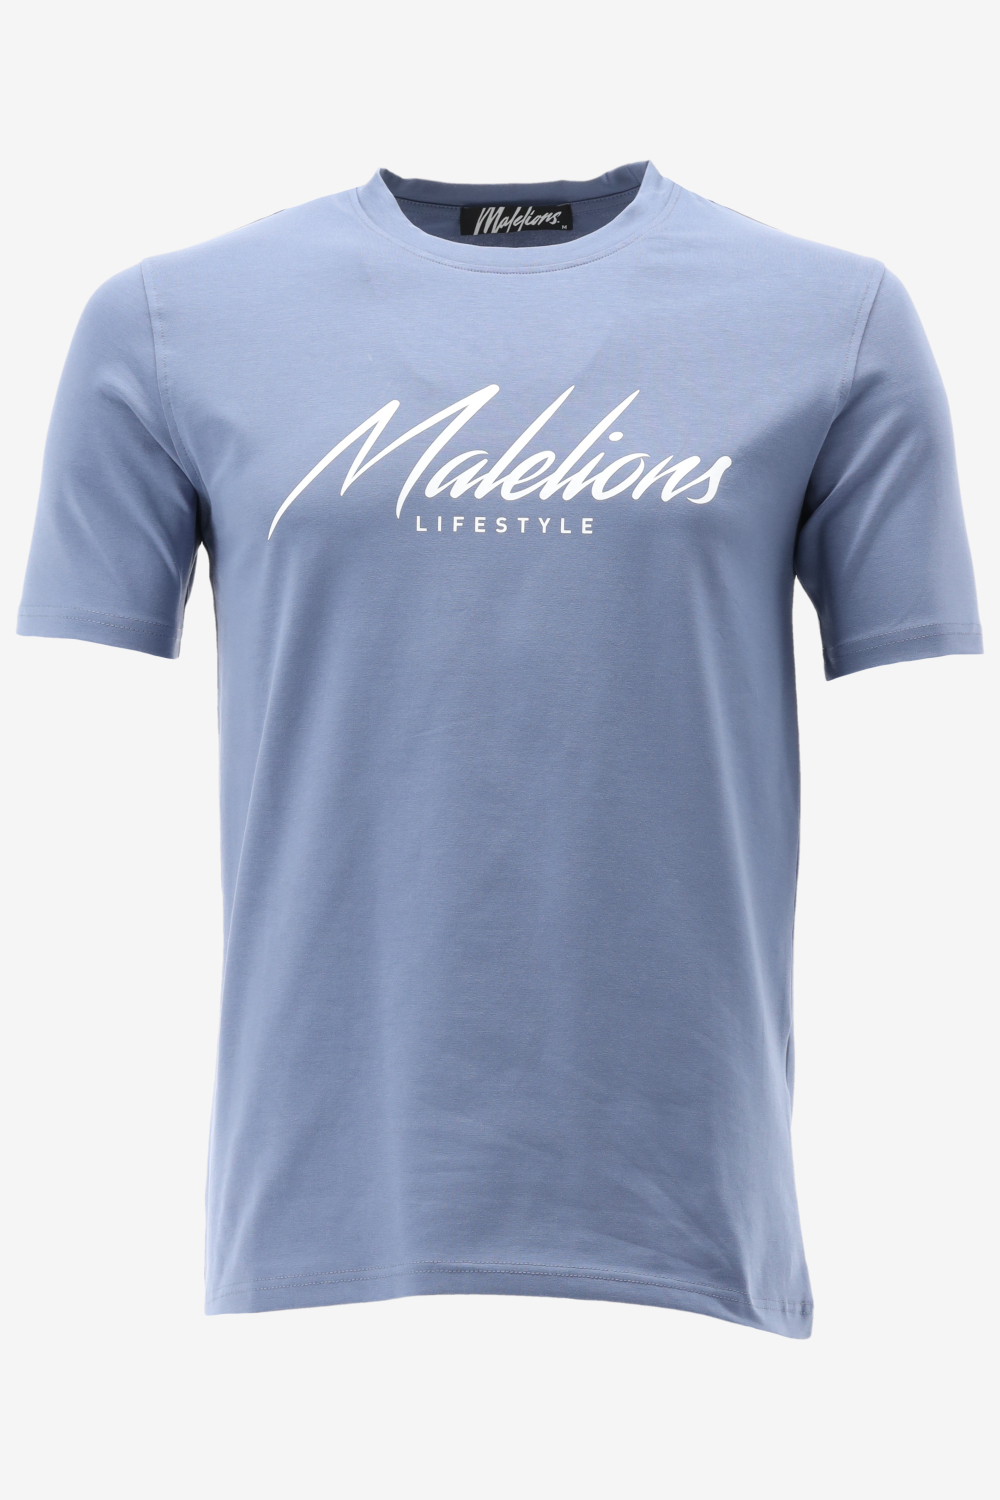 Malelions T shirt